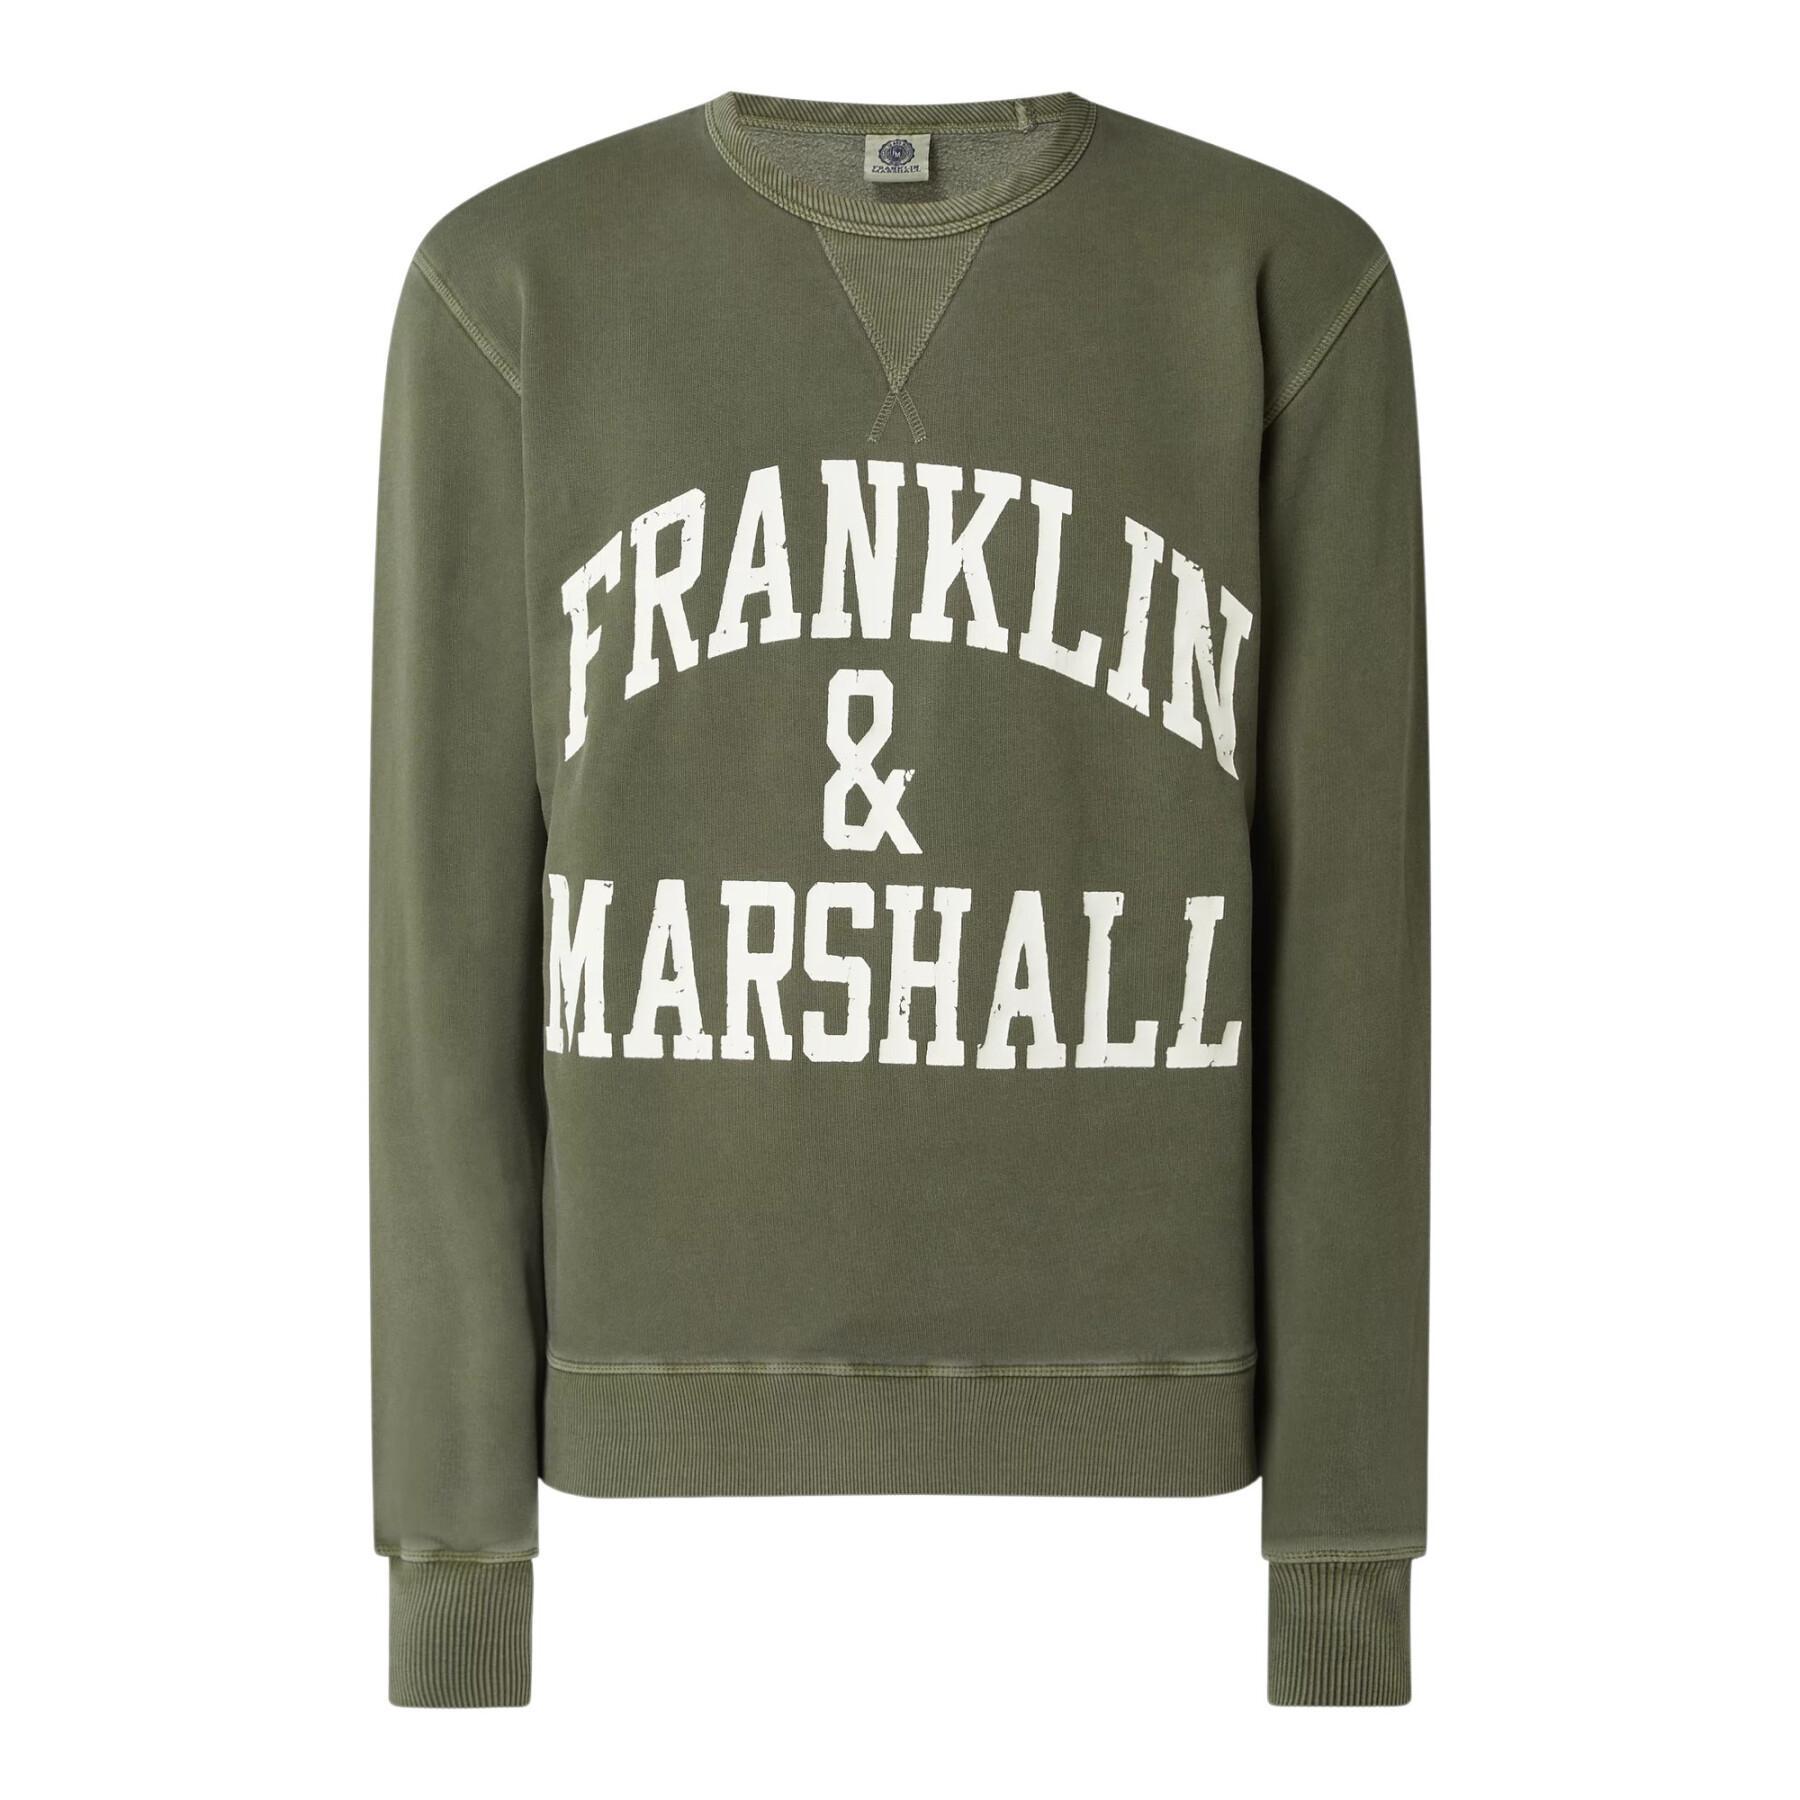 Sweatshirt Franklin & Marshall Clássico